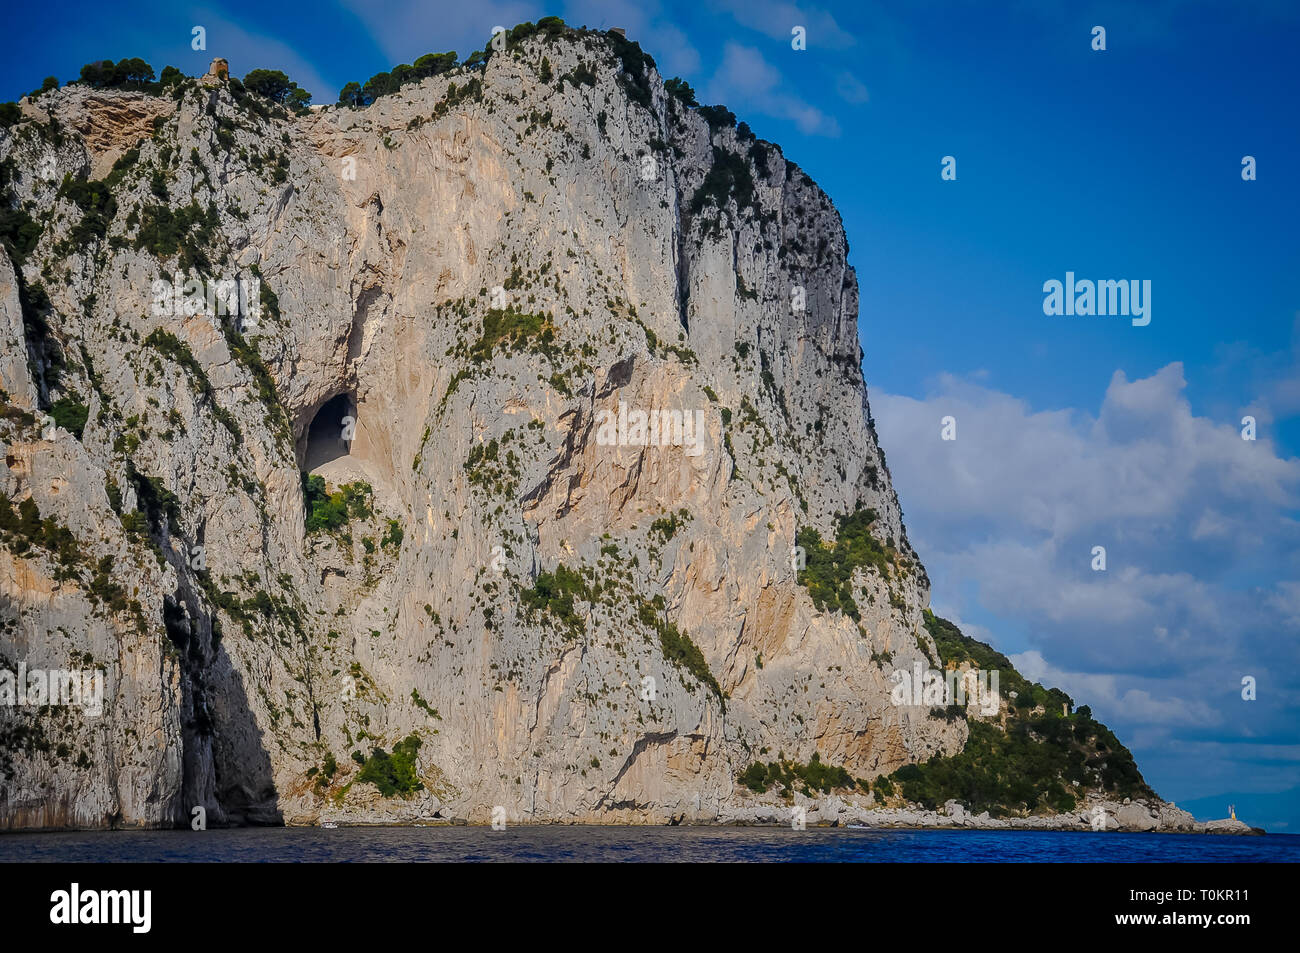 Vertical walls of the rocky coast of the island of Capri, Italy Stock Photo